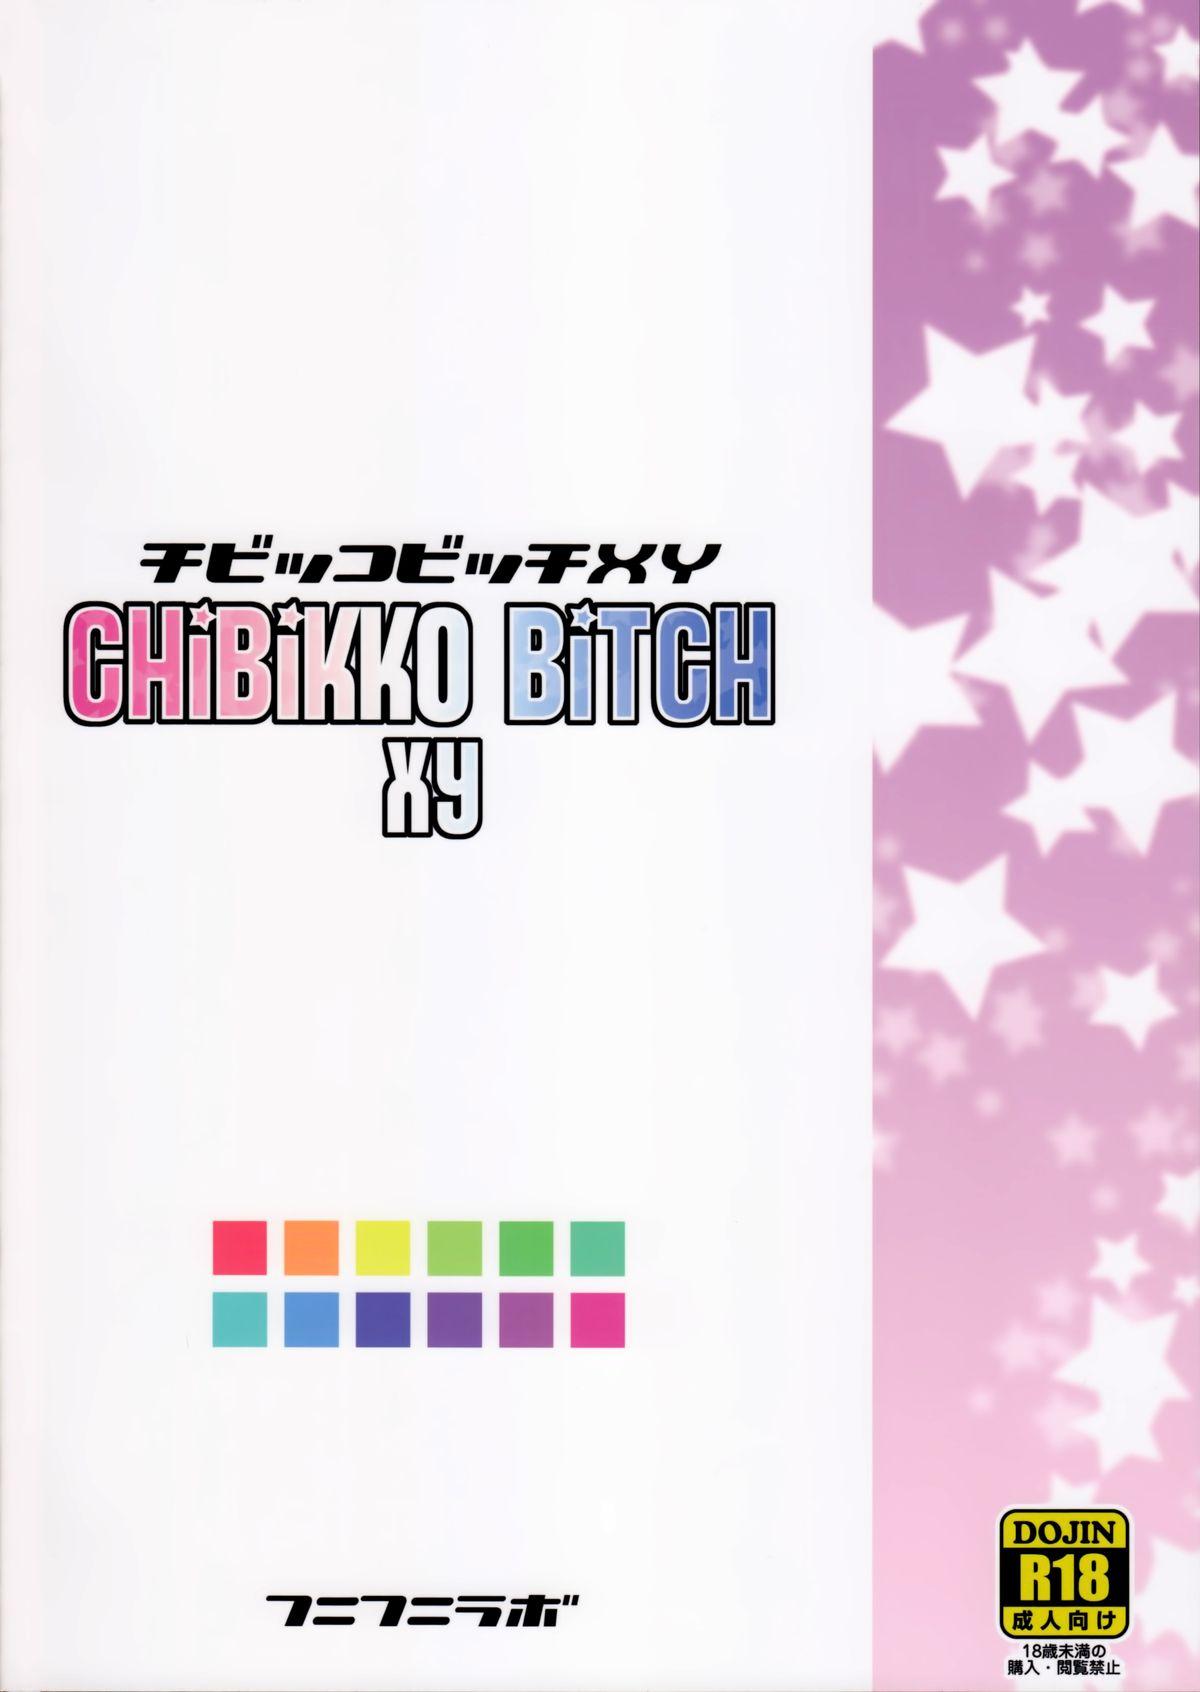 Chibikko Bitch XY 33